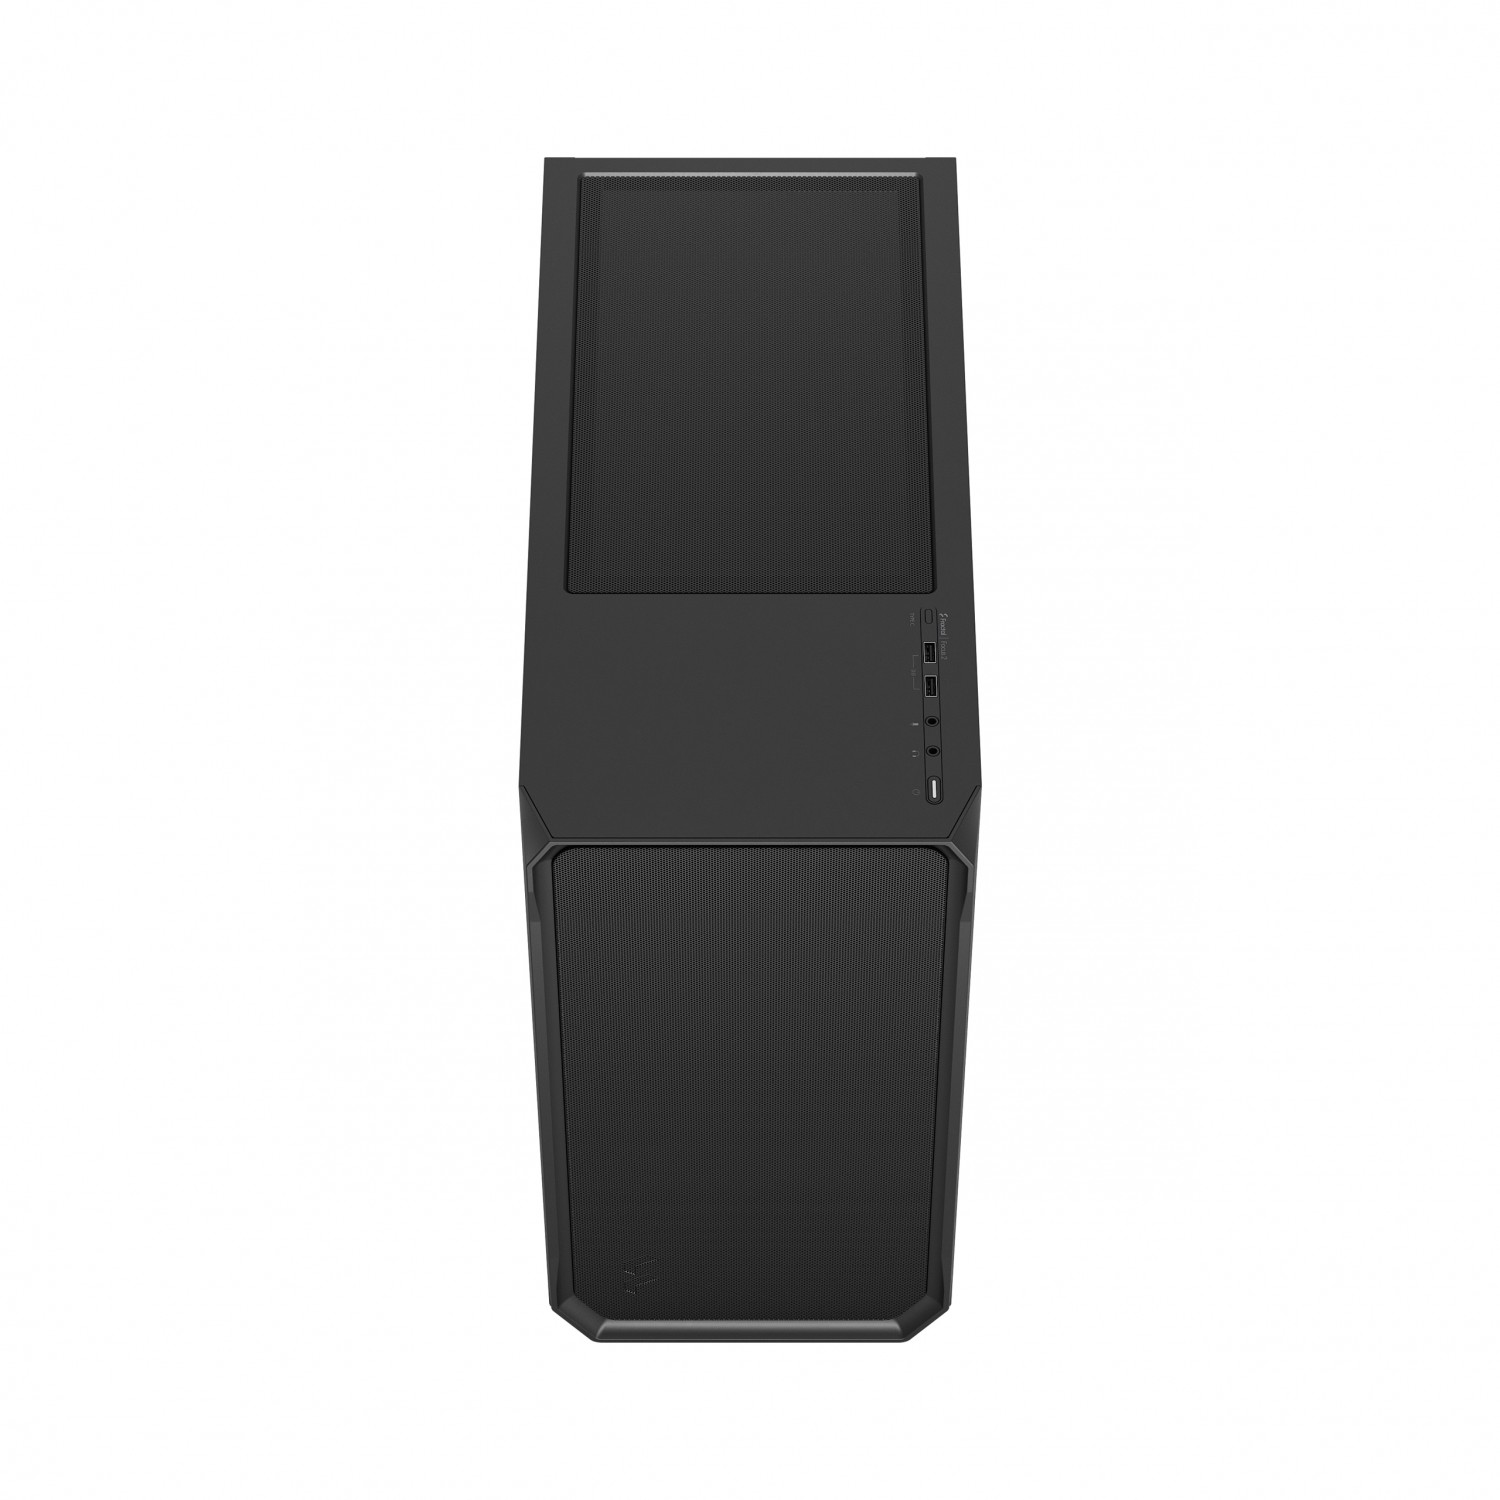 کیس کامپیوتر فرکتال دیزاین مدل Fractal Design Focus 2 - Black Solid